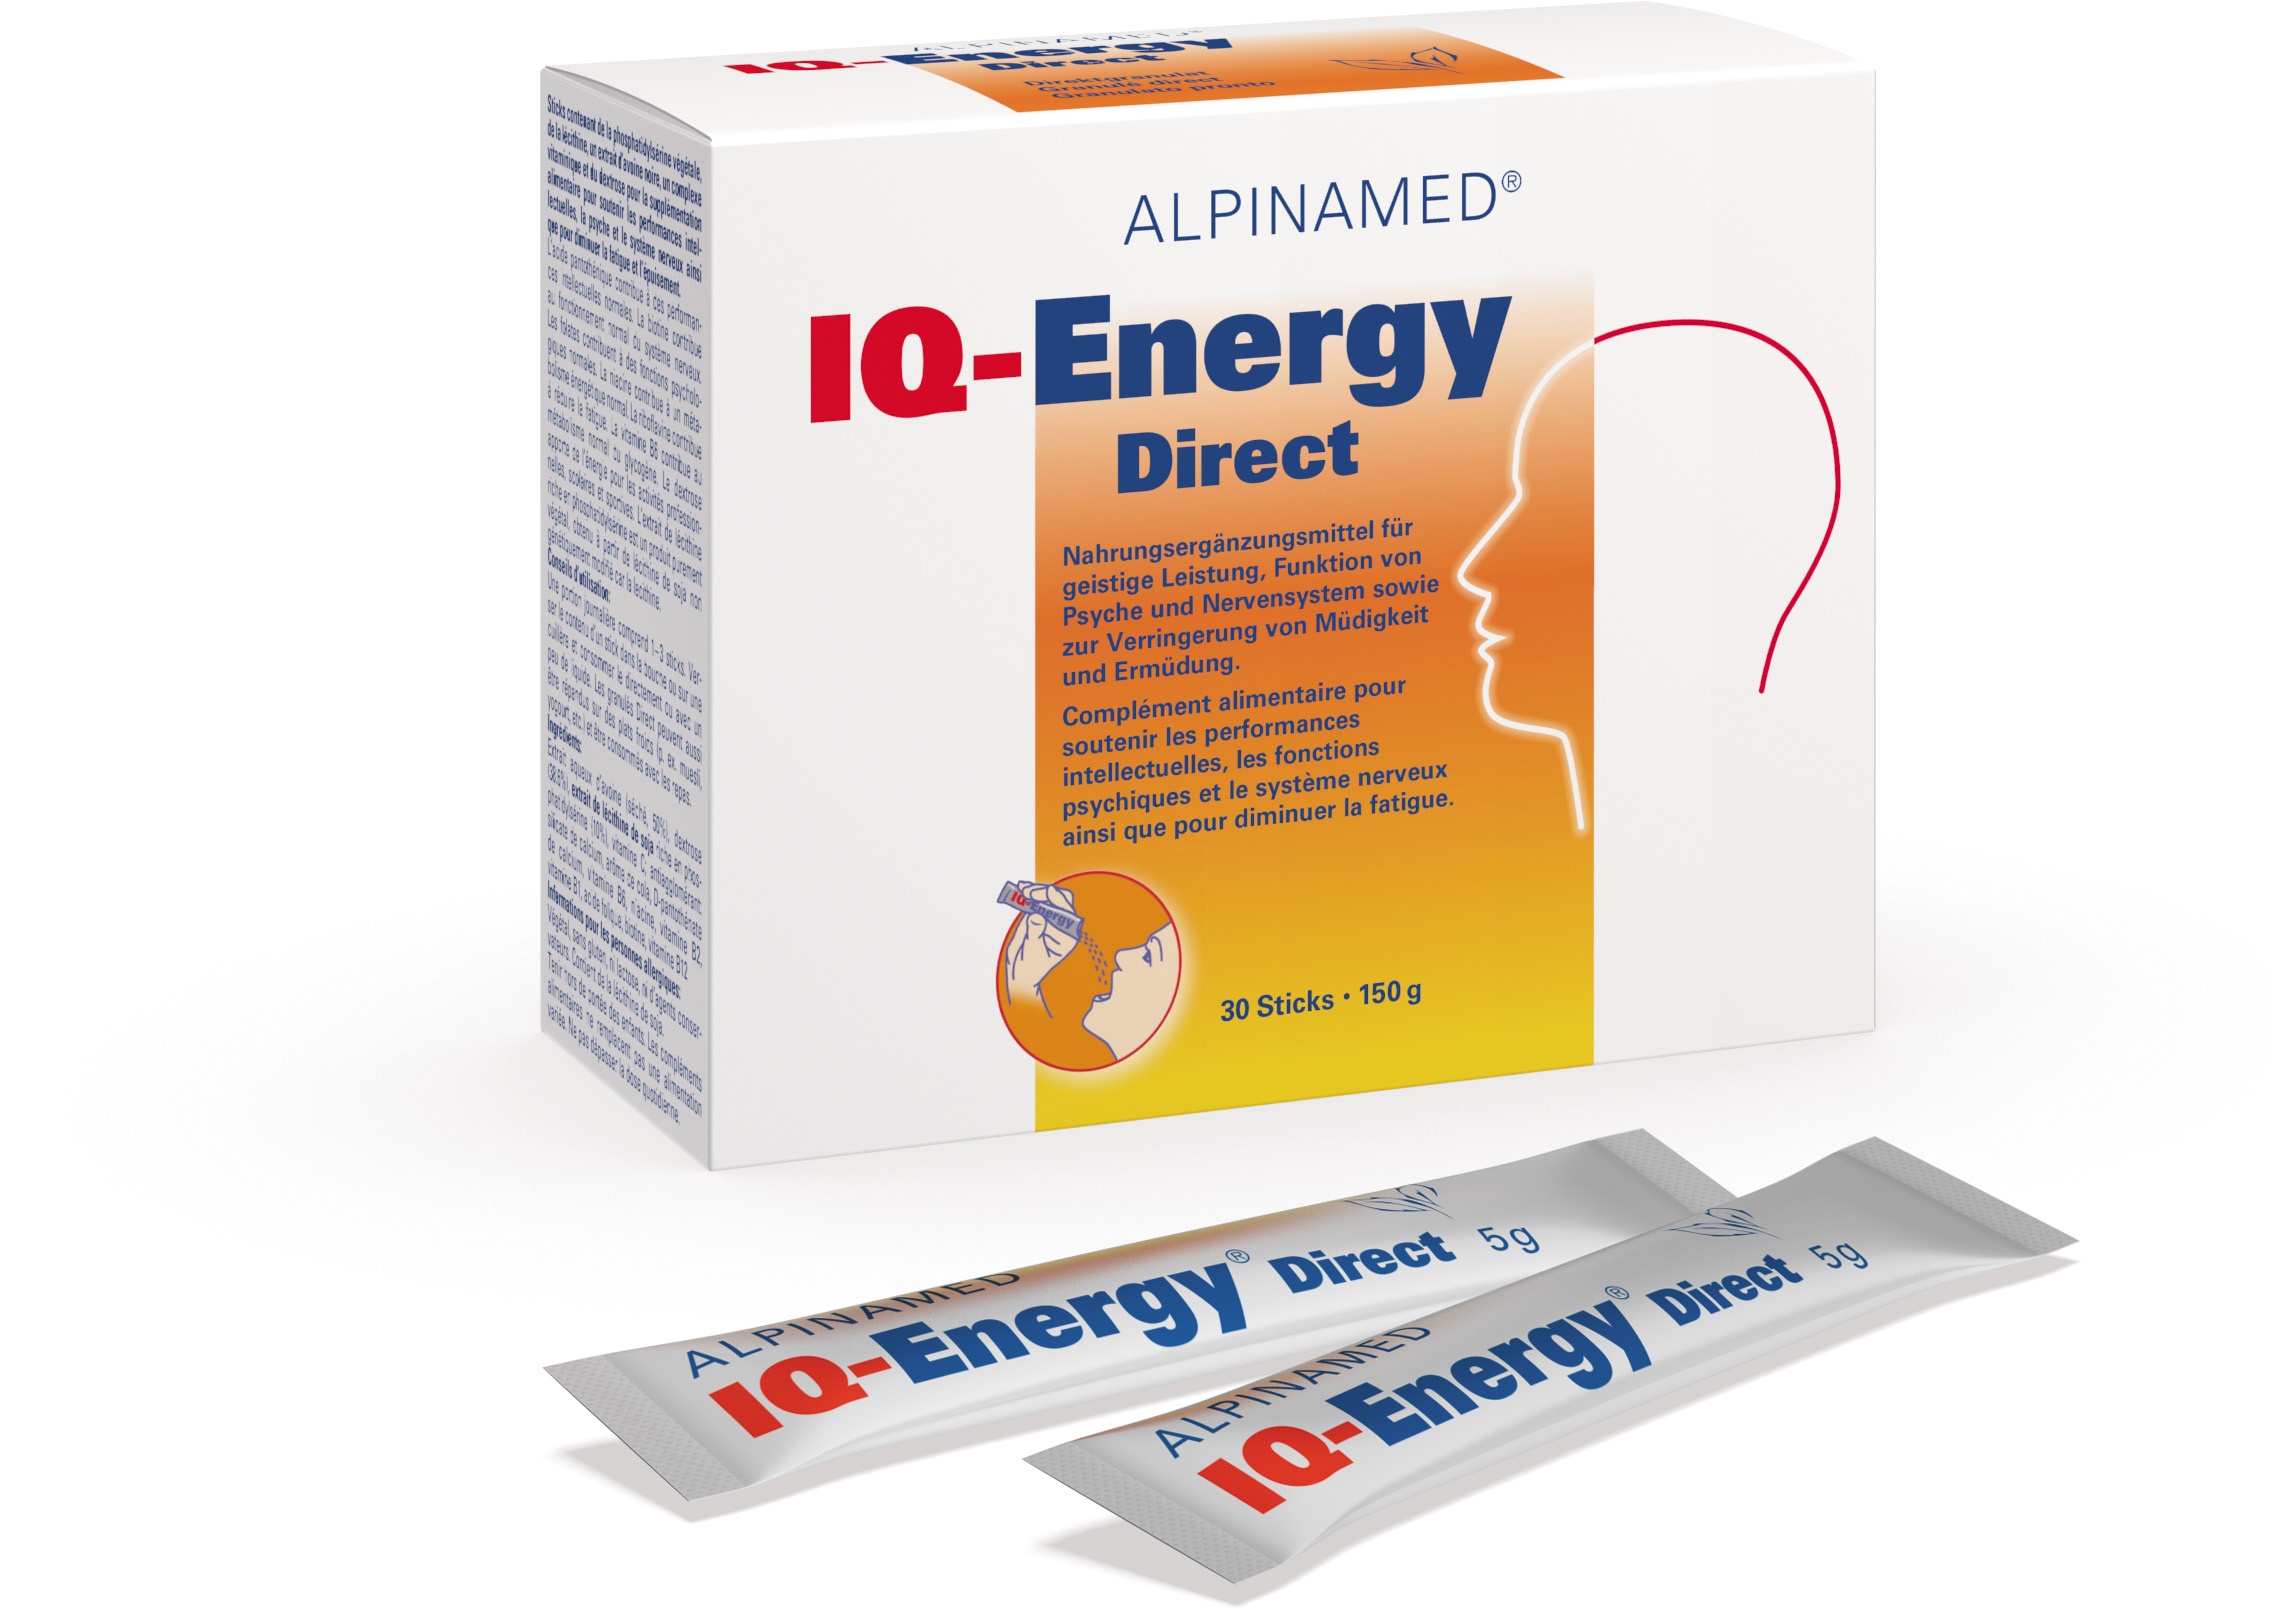 Alpinamed IQ-Energy Direct (30 x 5g)